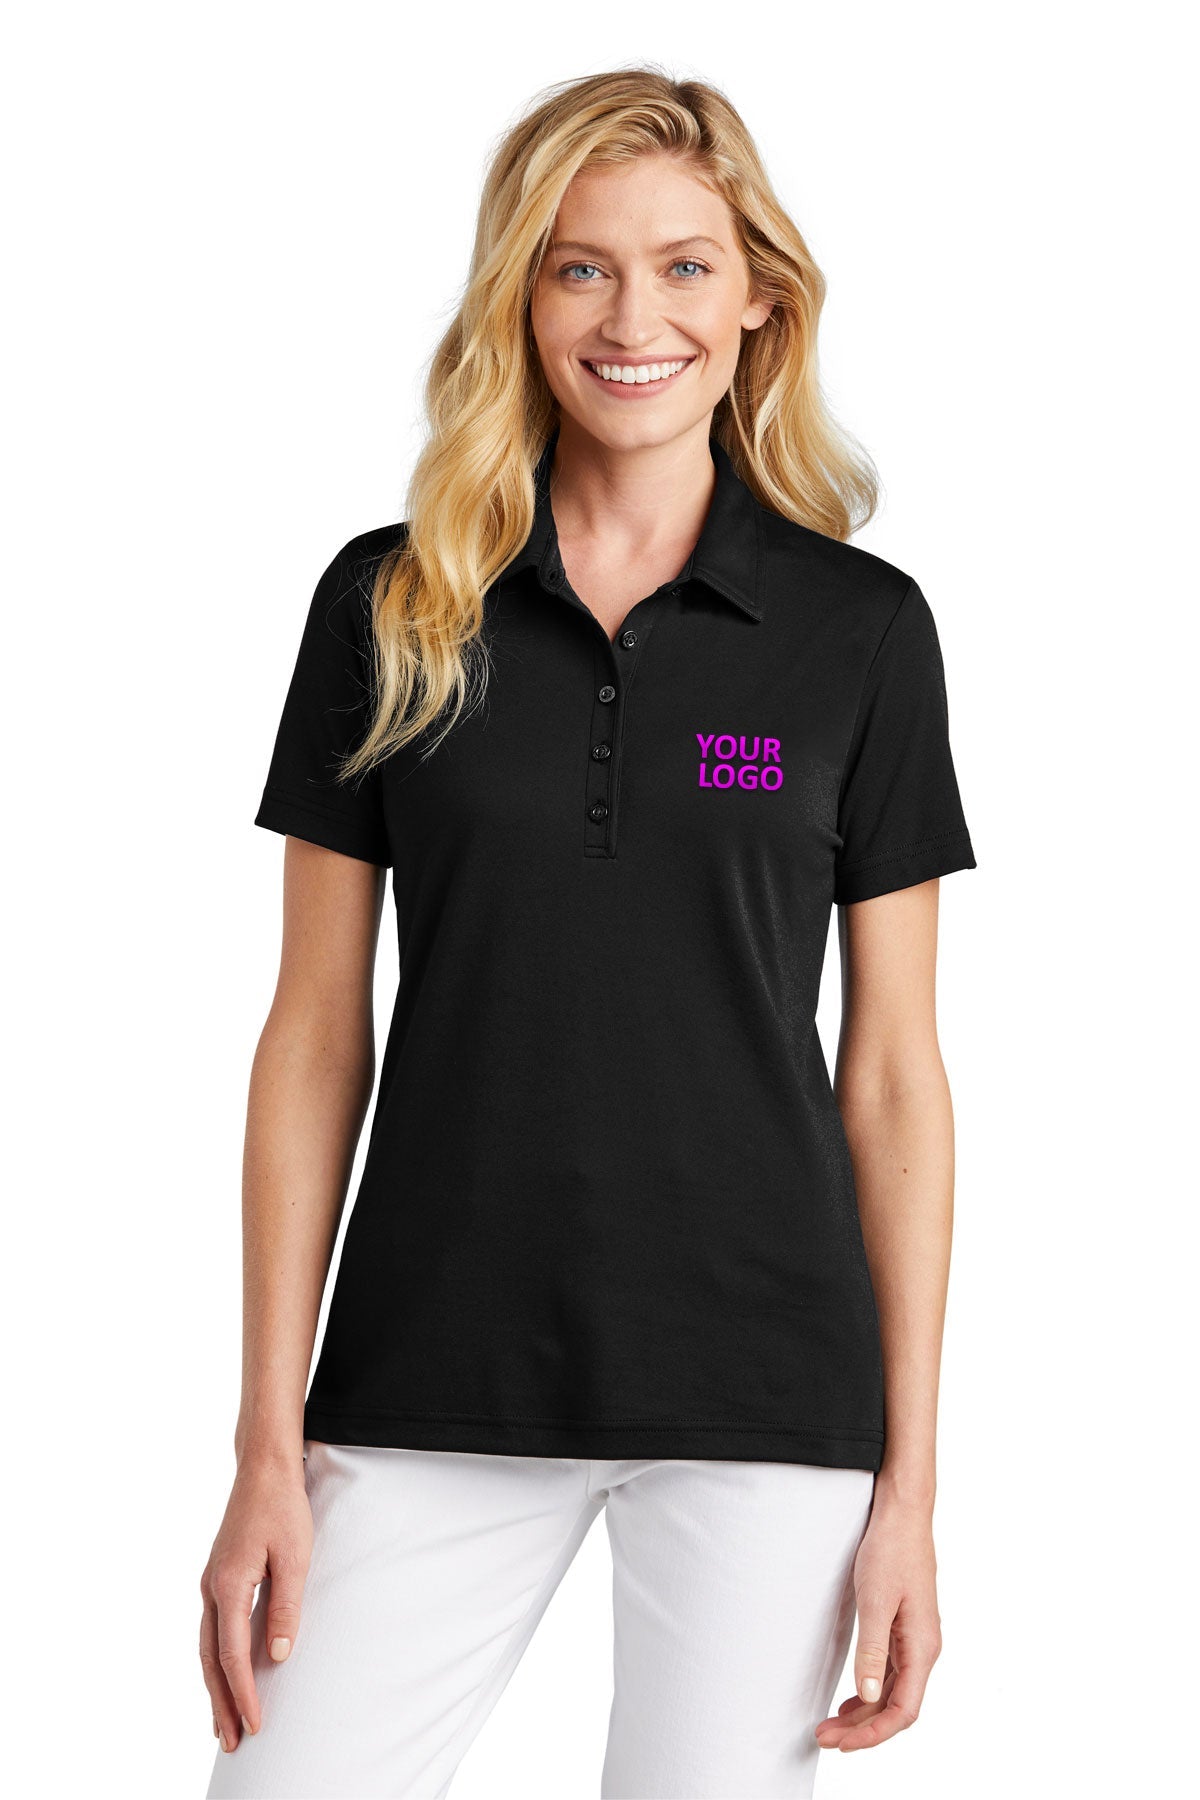 TravisMathew Black Polos custom polo shirts with logo